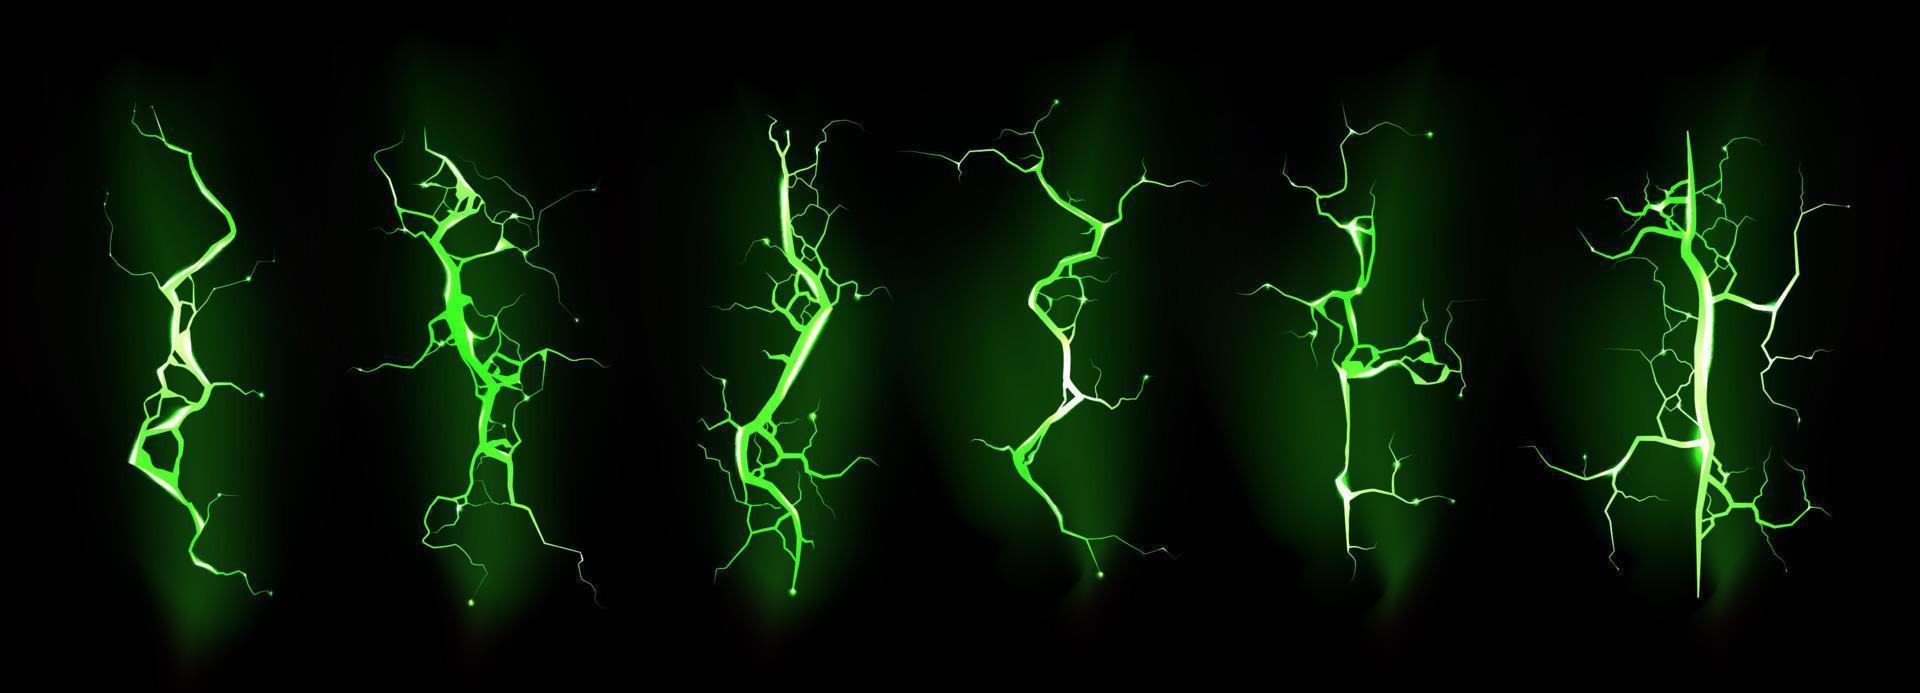 Ground cracks with glow, green lightning set vector